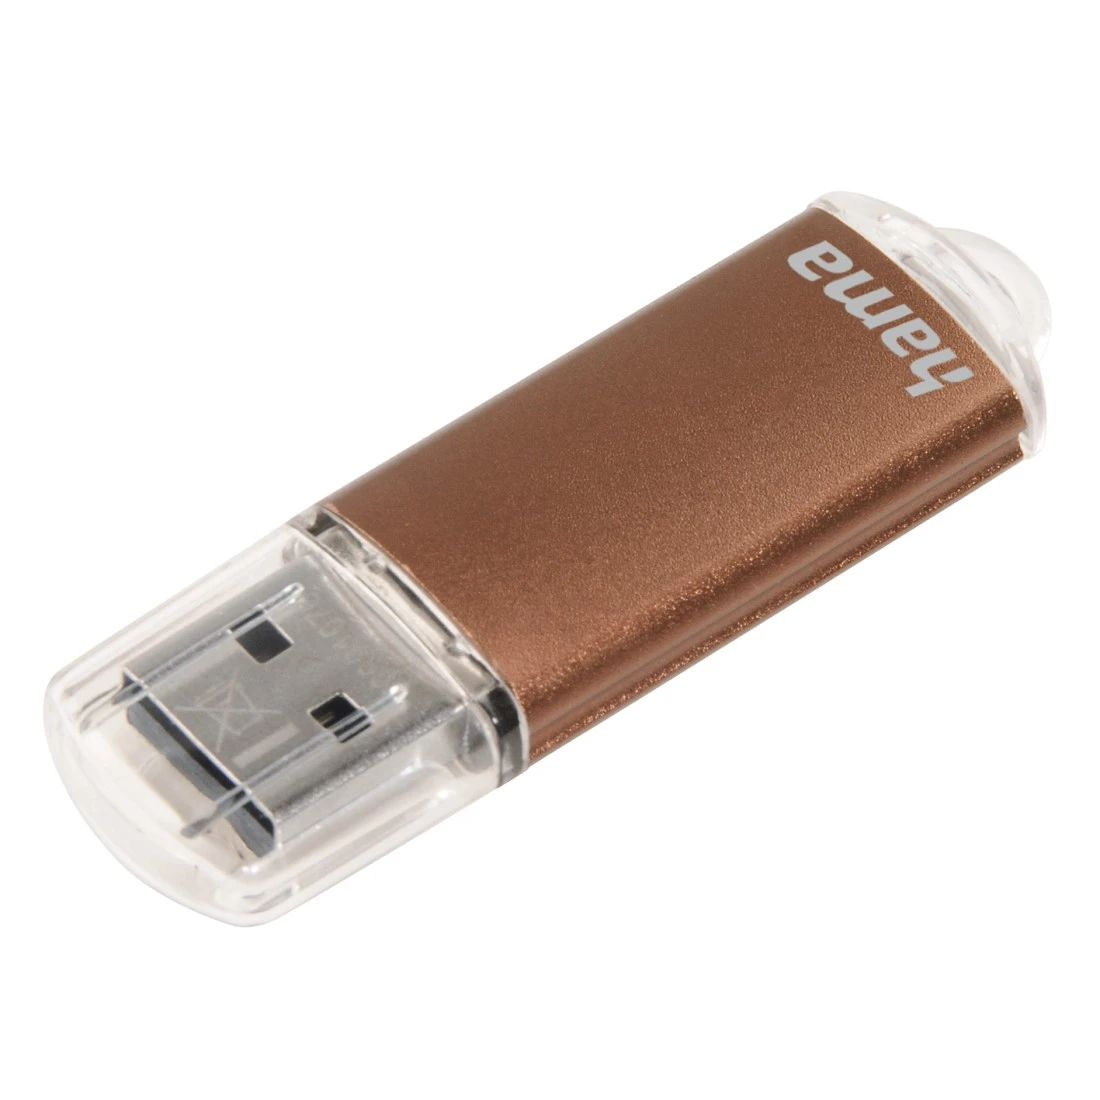 Clé USB métal avec protection cuir